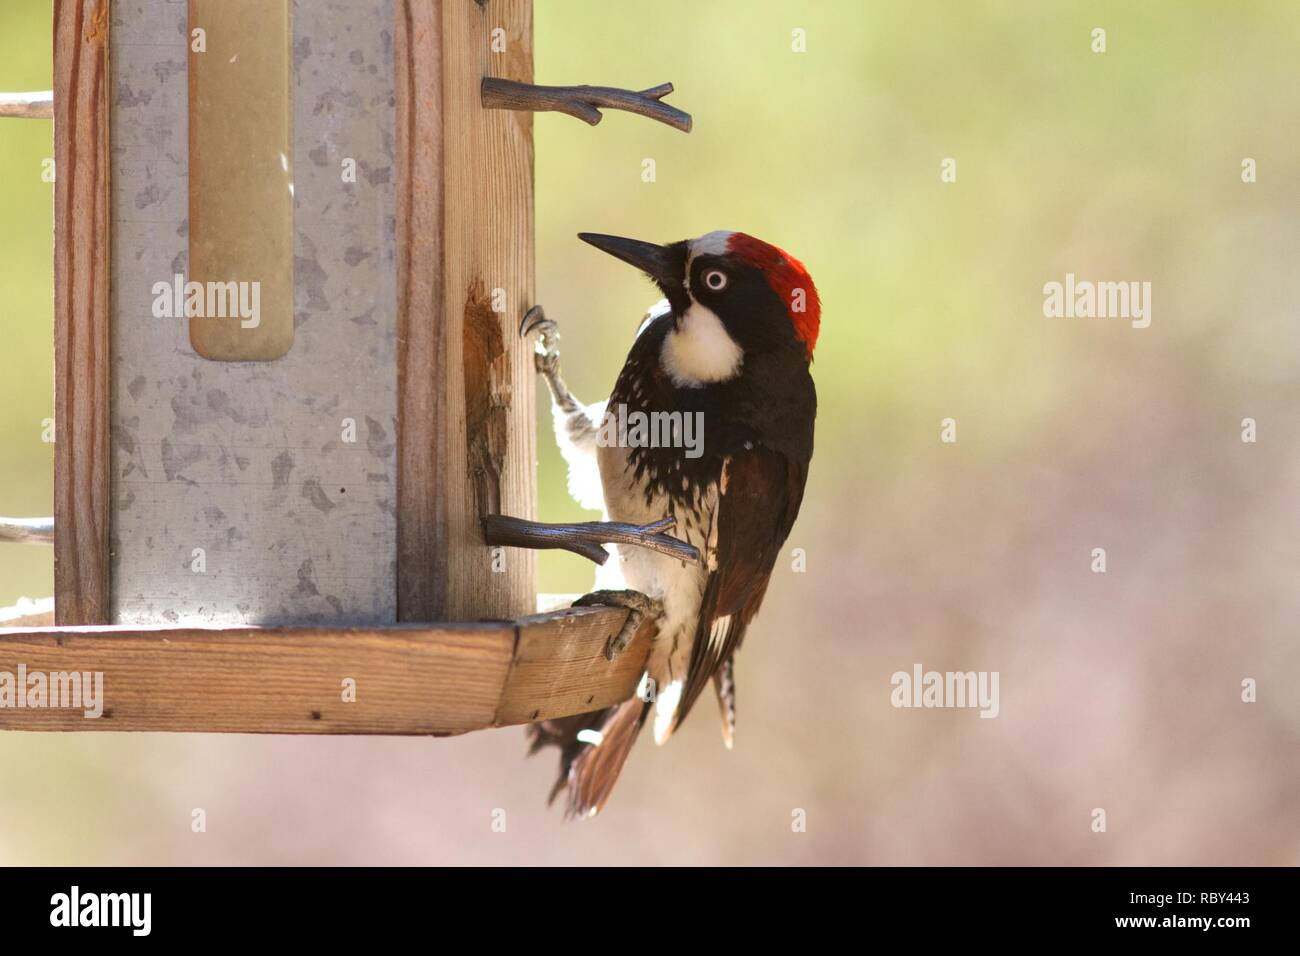 An Acorn Woodpecker inspects the bird feeder. I hope he likes sunflower seeds... Acorn Woodpecker inspects the bird feeder. Stock Photo